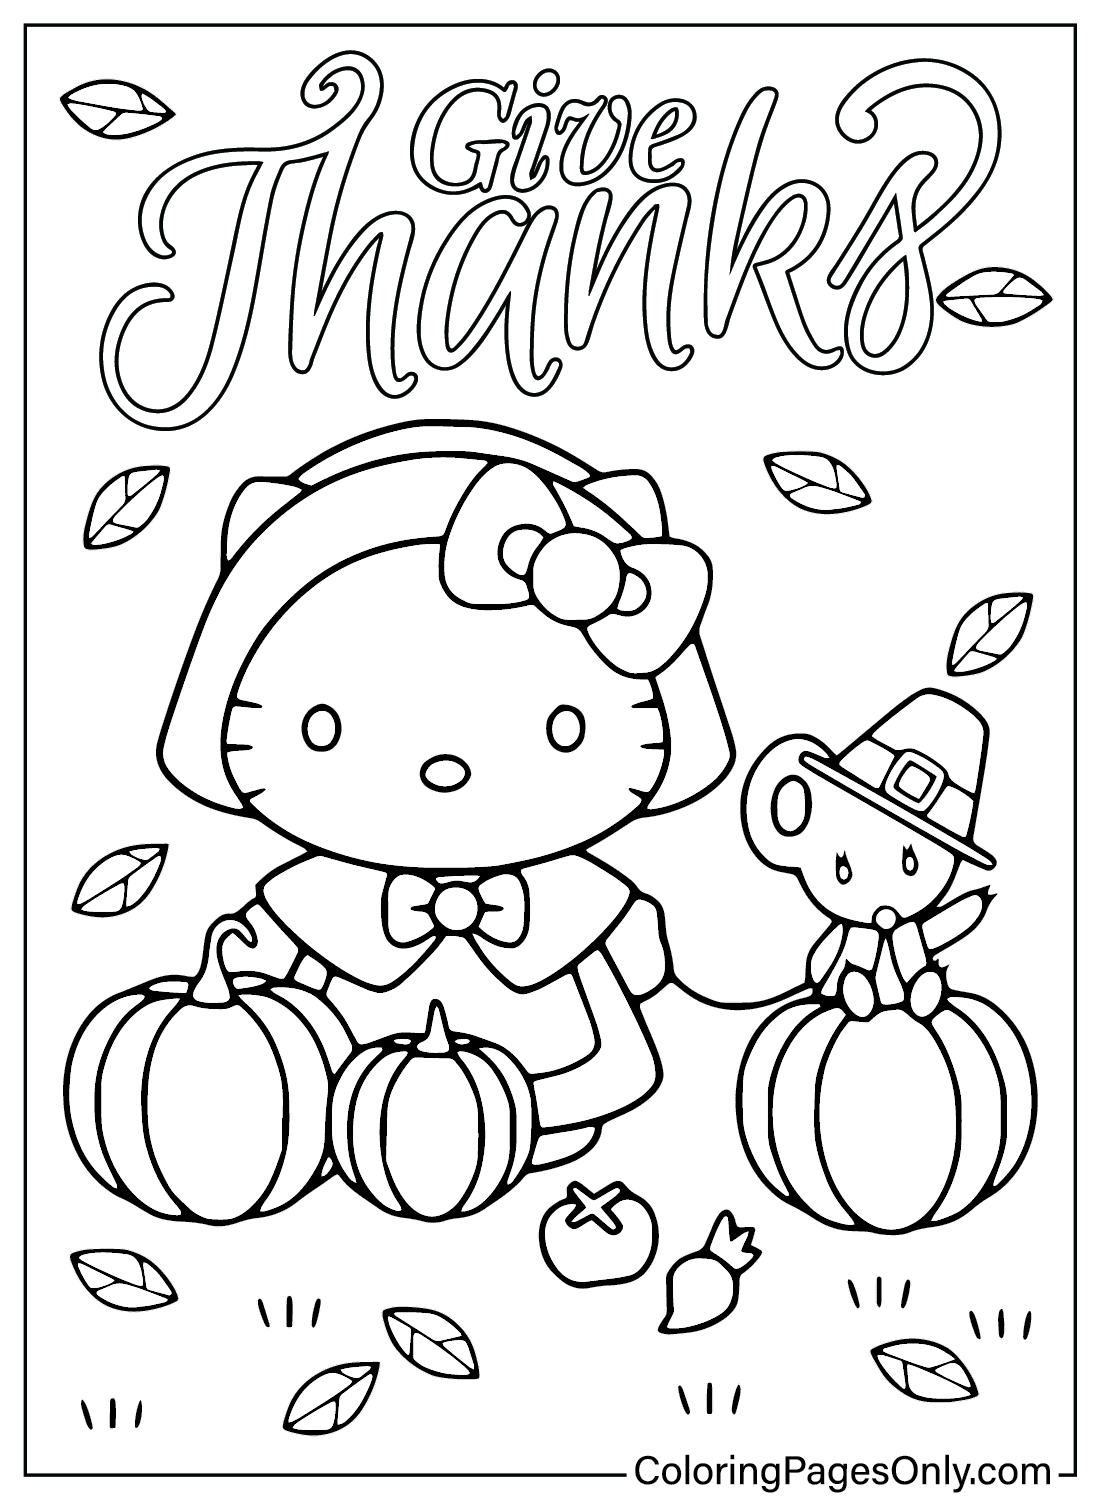 Página para colorear de Hello Kitty de Acción de Gracias de dibujos animados de Acción de Gracias